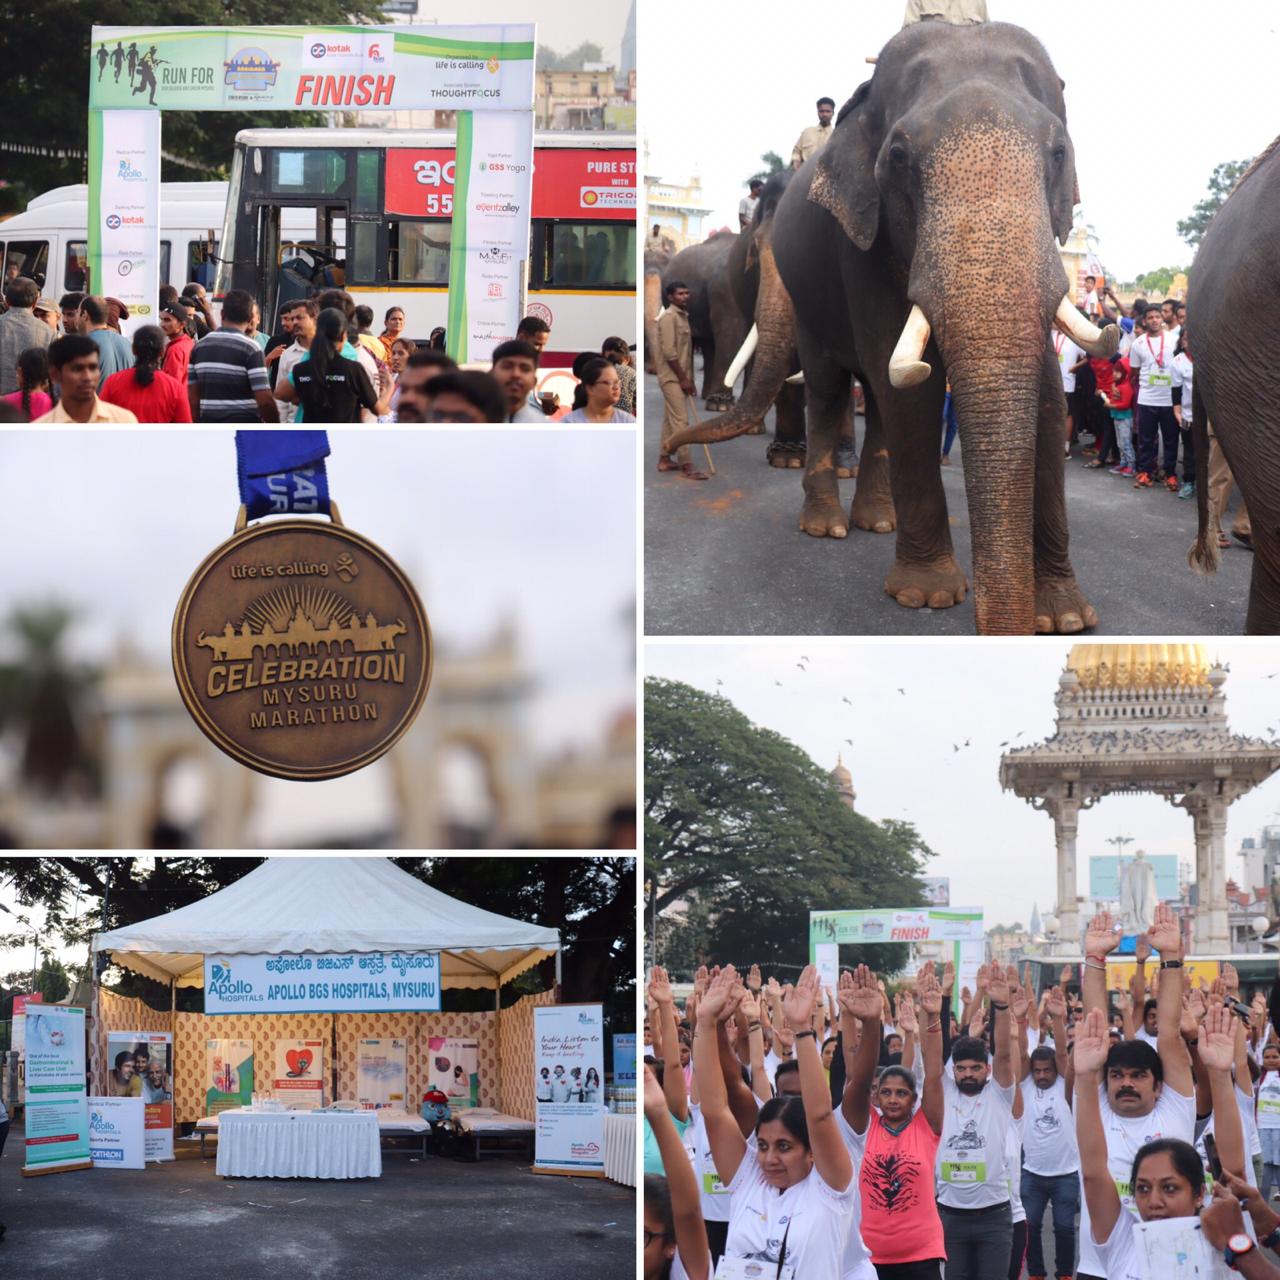 Apollo BGS Hospitals, Mysore in association with Life Is Calling participated in their Celebration Mysore Marathon